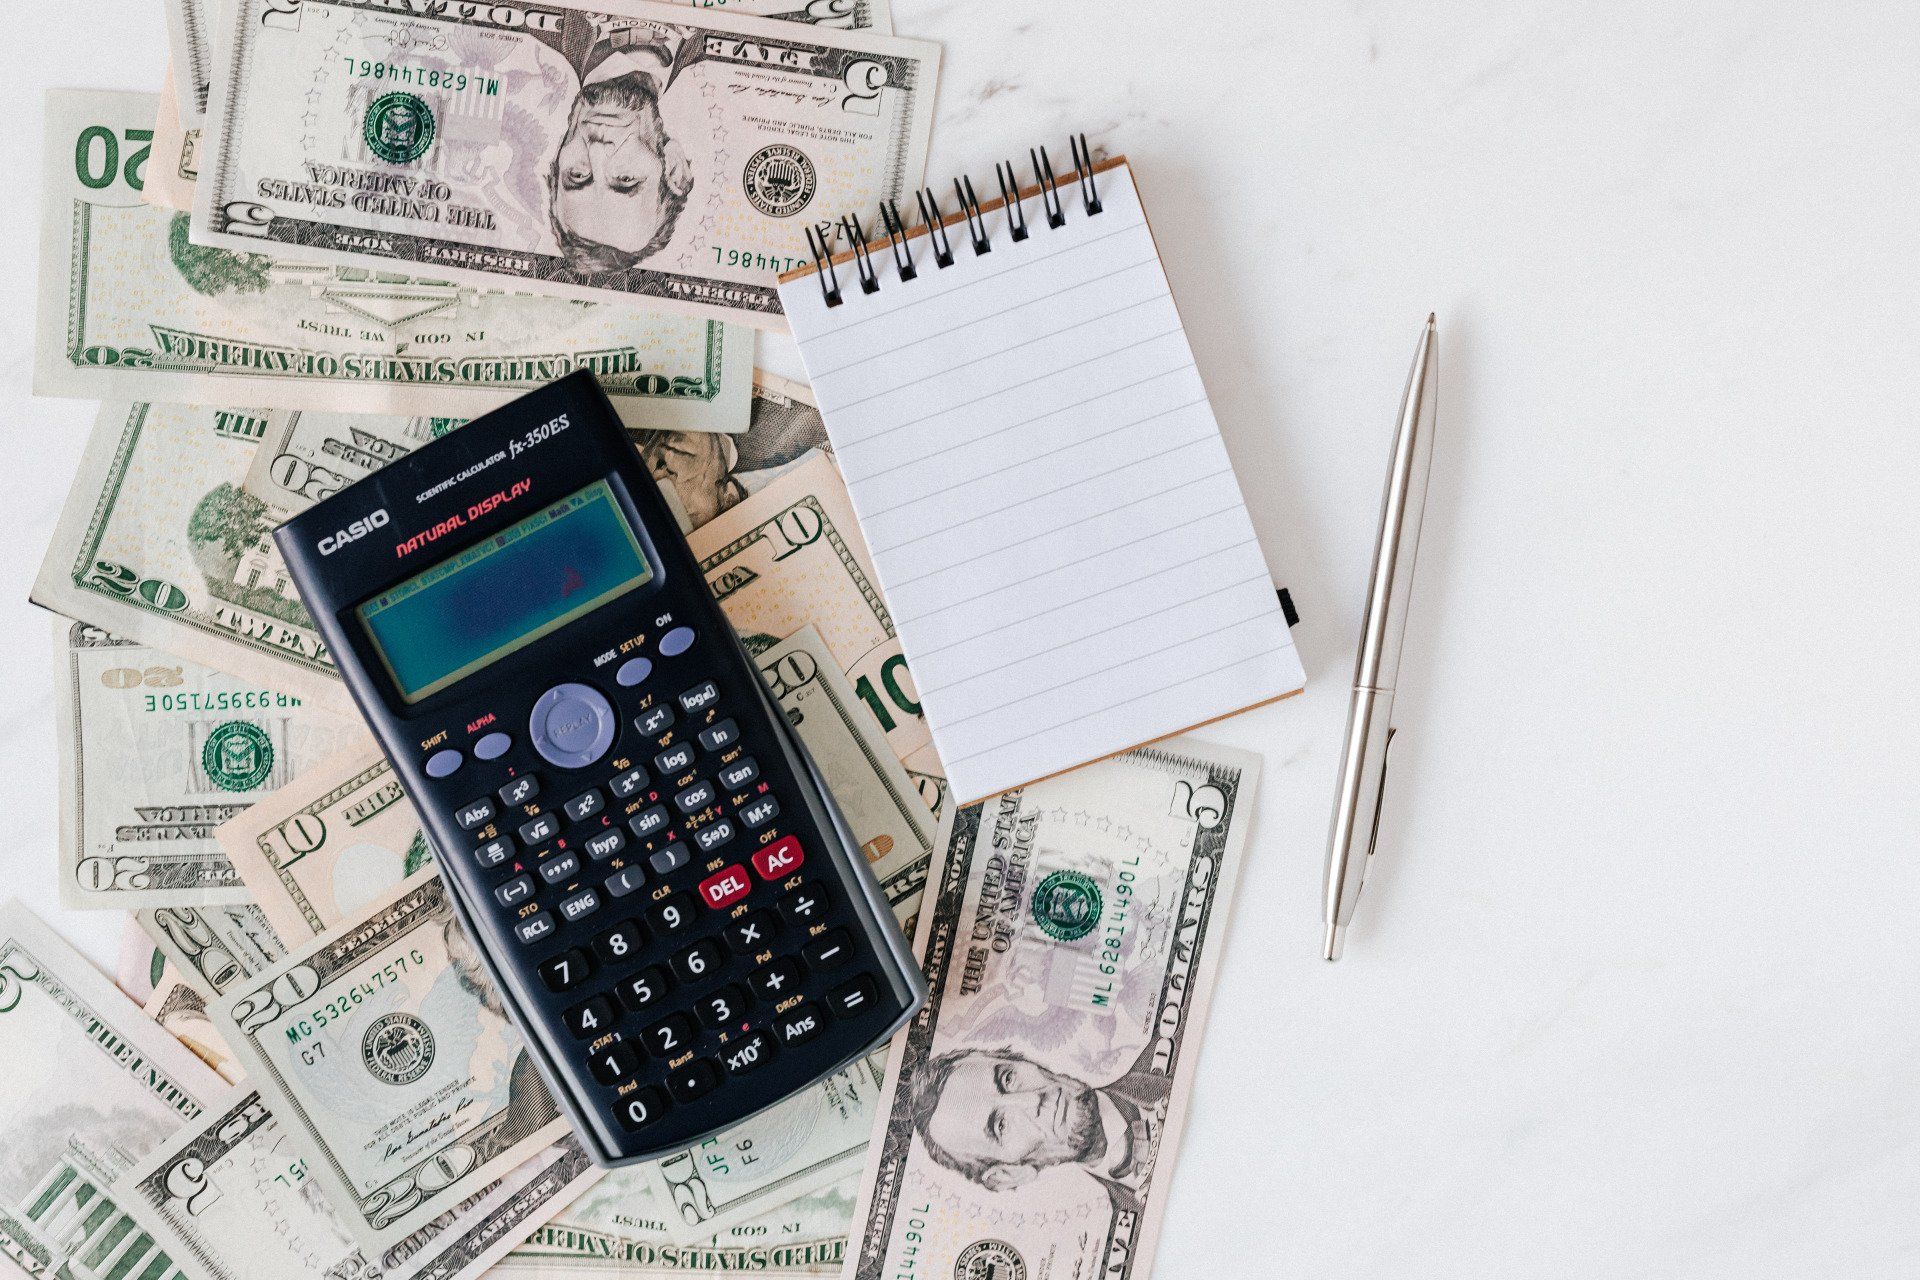 calculator, pad of paper, pen, and cash